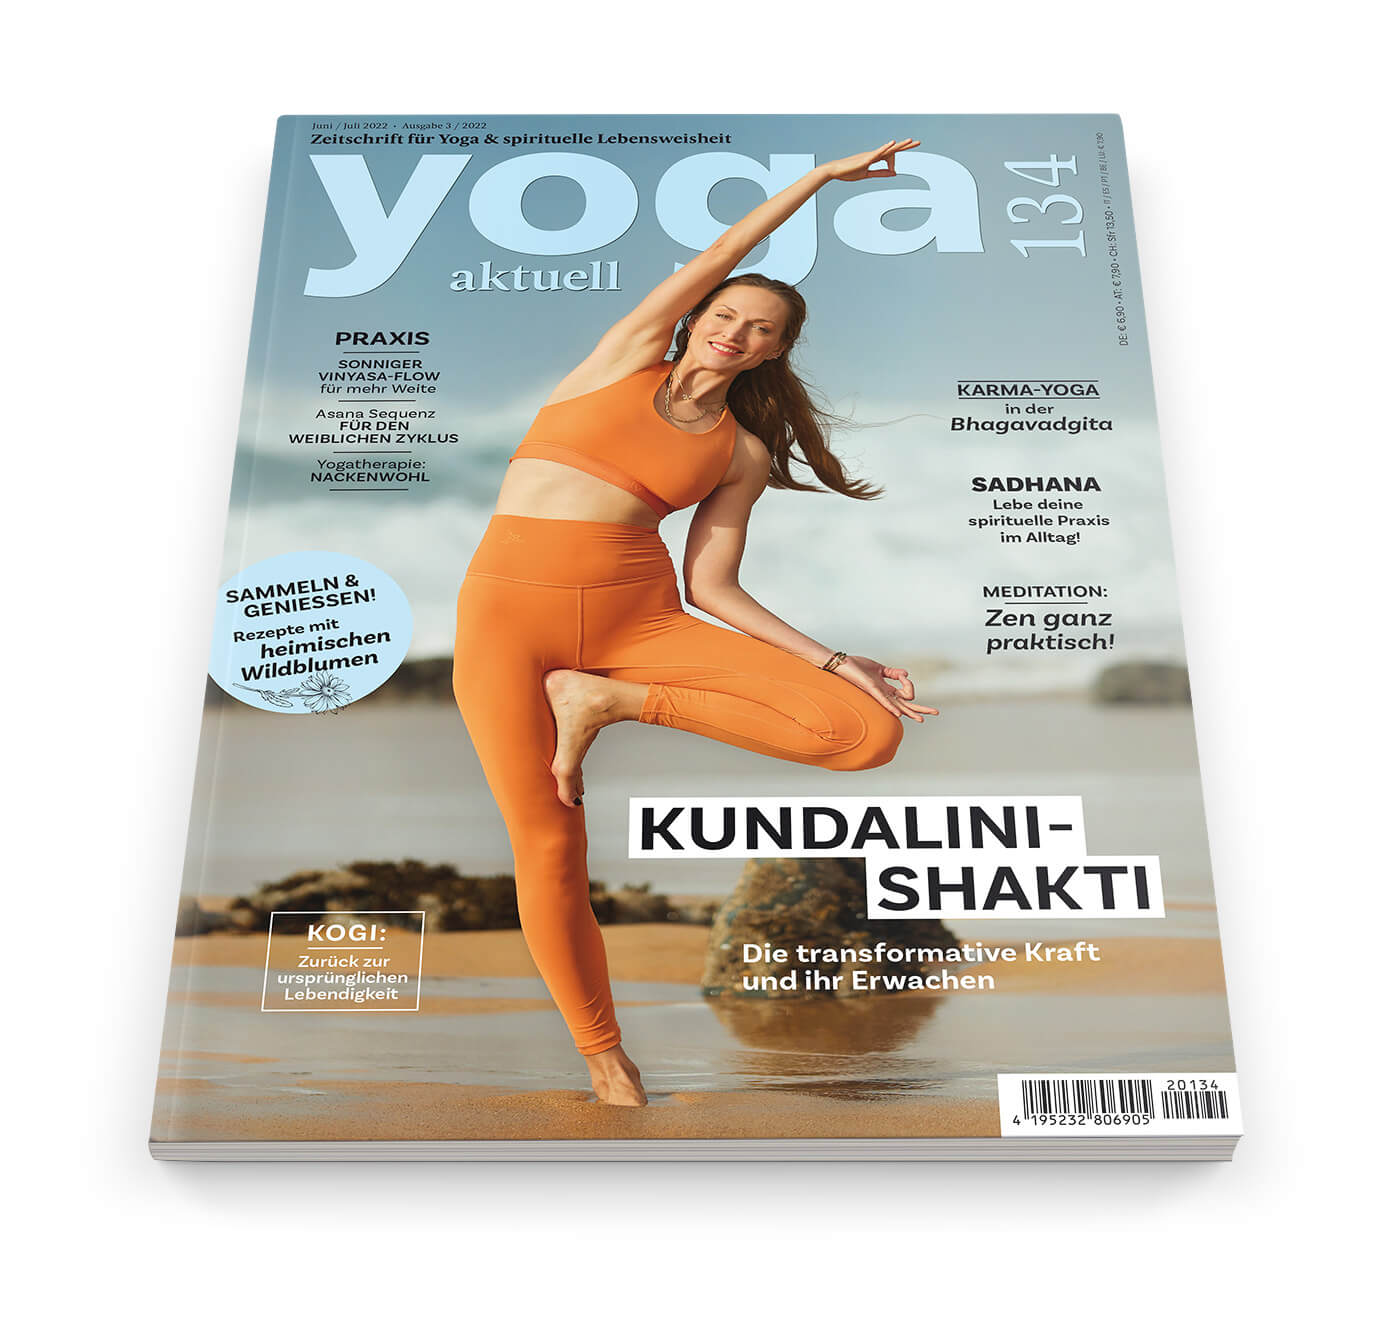 von Harmonic Mandala Yoga-set Starter Edition yogamatte + 2 Yogablöcke 